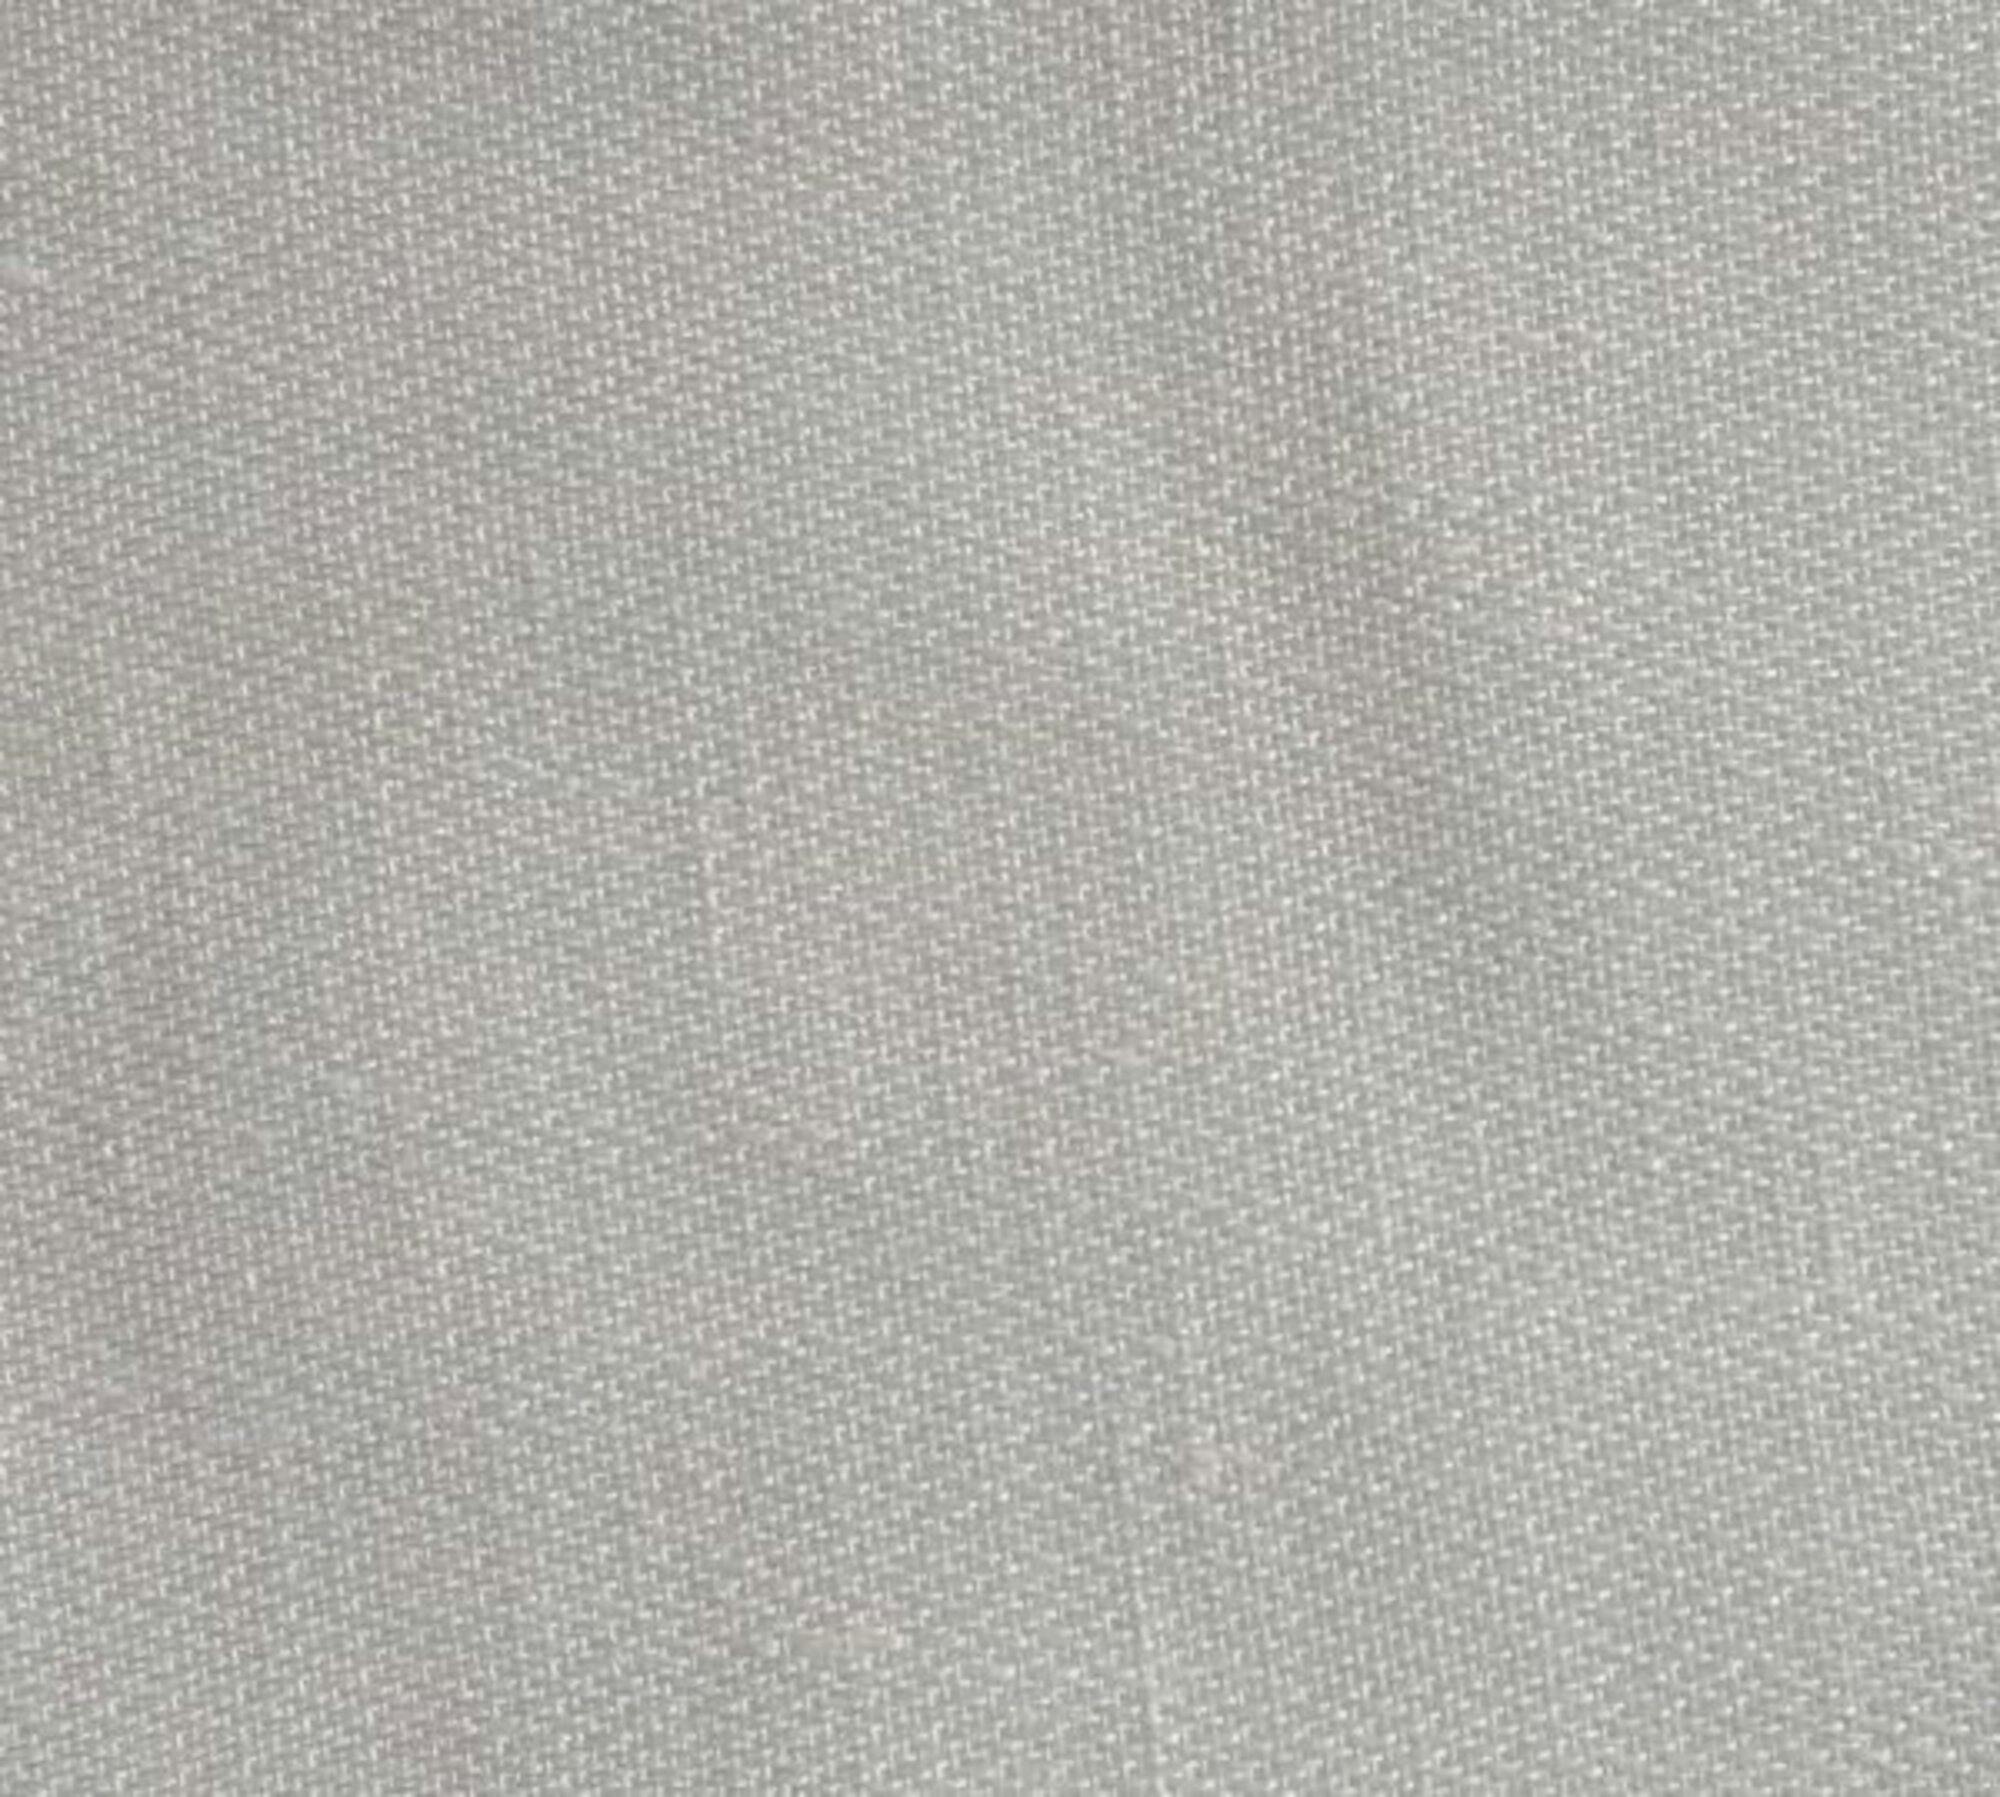 Limba curtain fabric